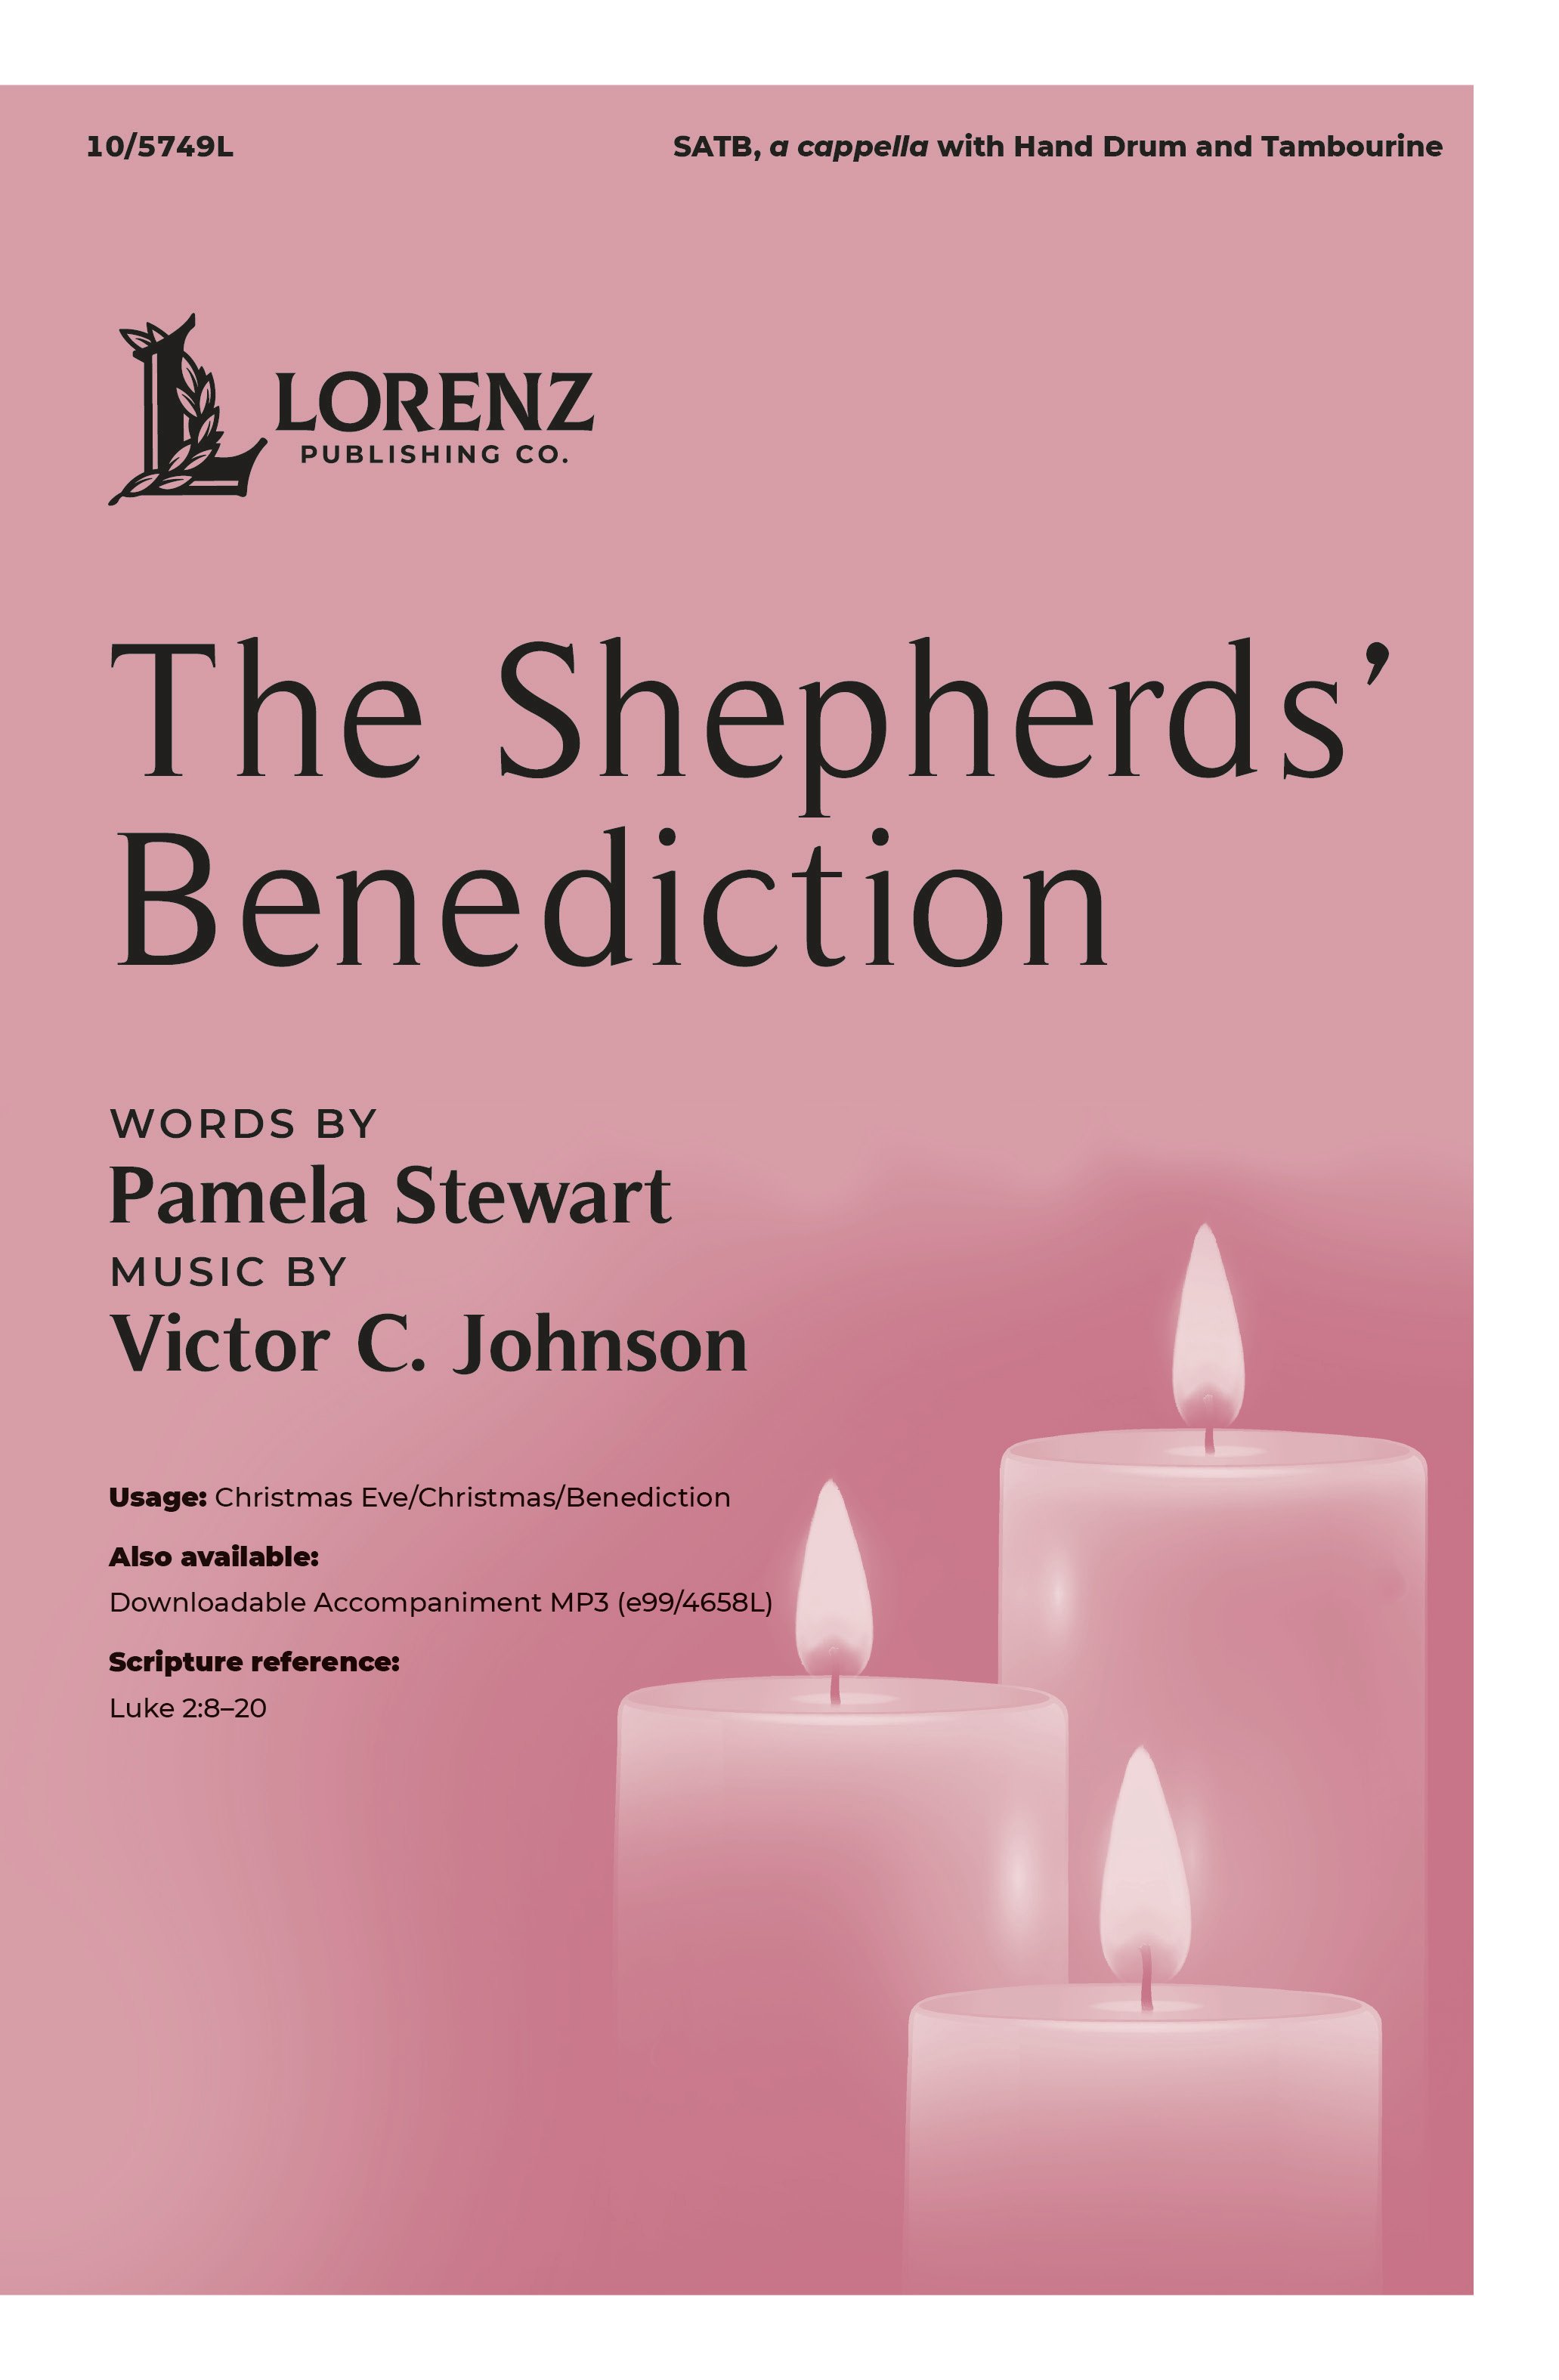 The Shepherd's Benediction